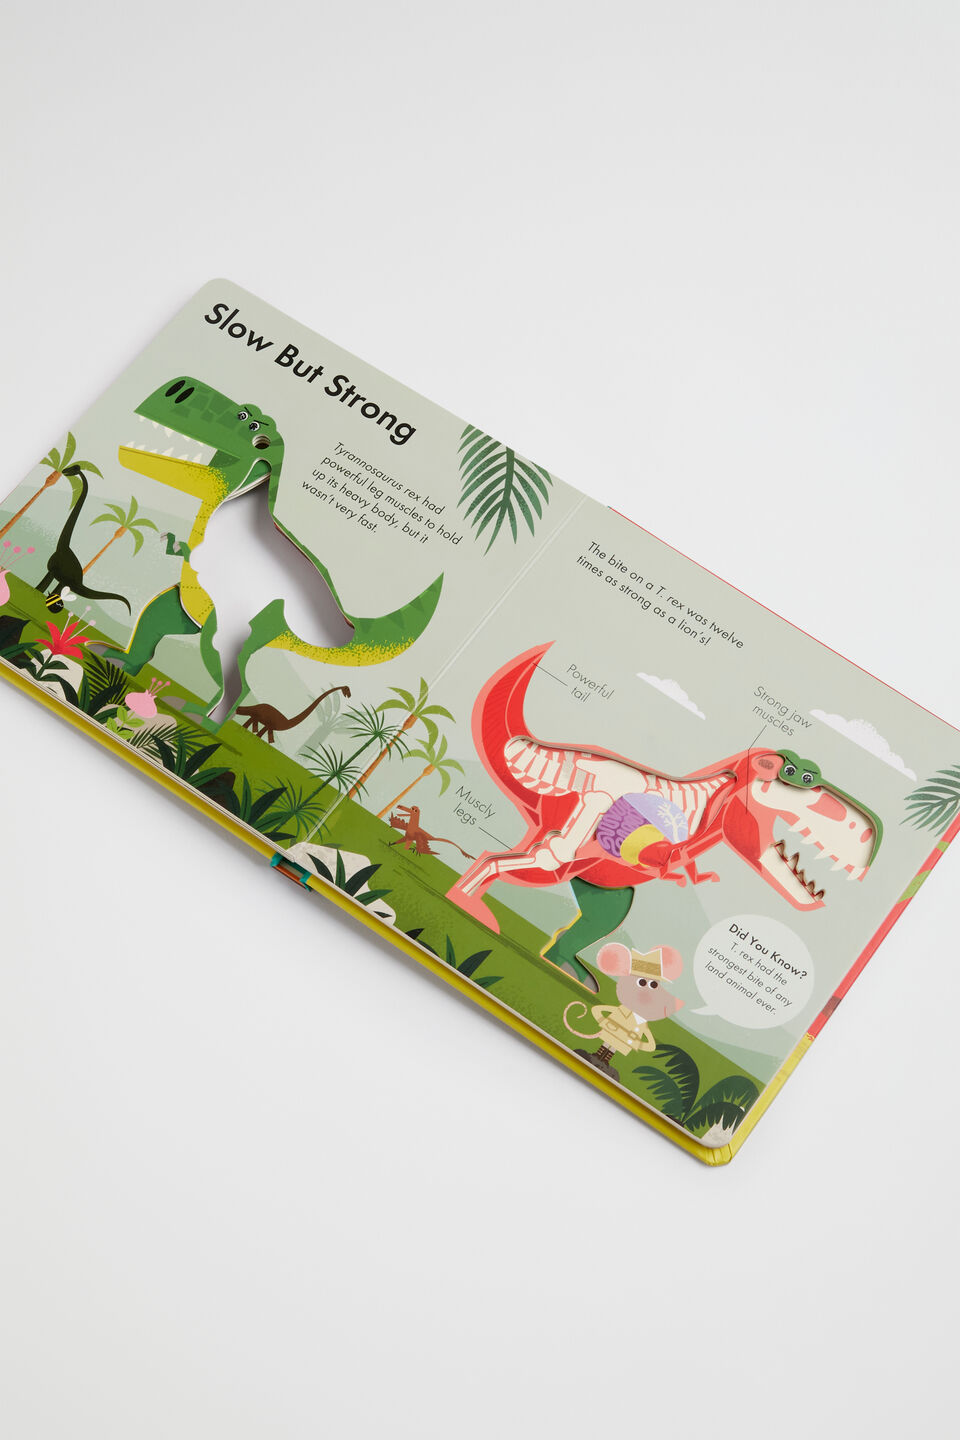 How It Works Dinosaur Book  Multi